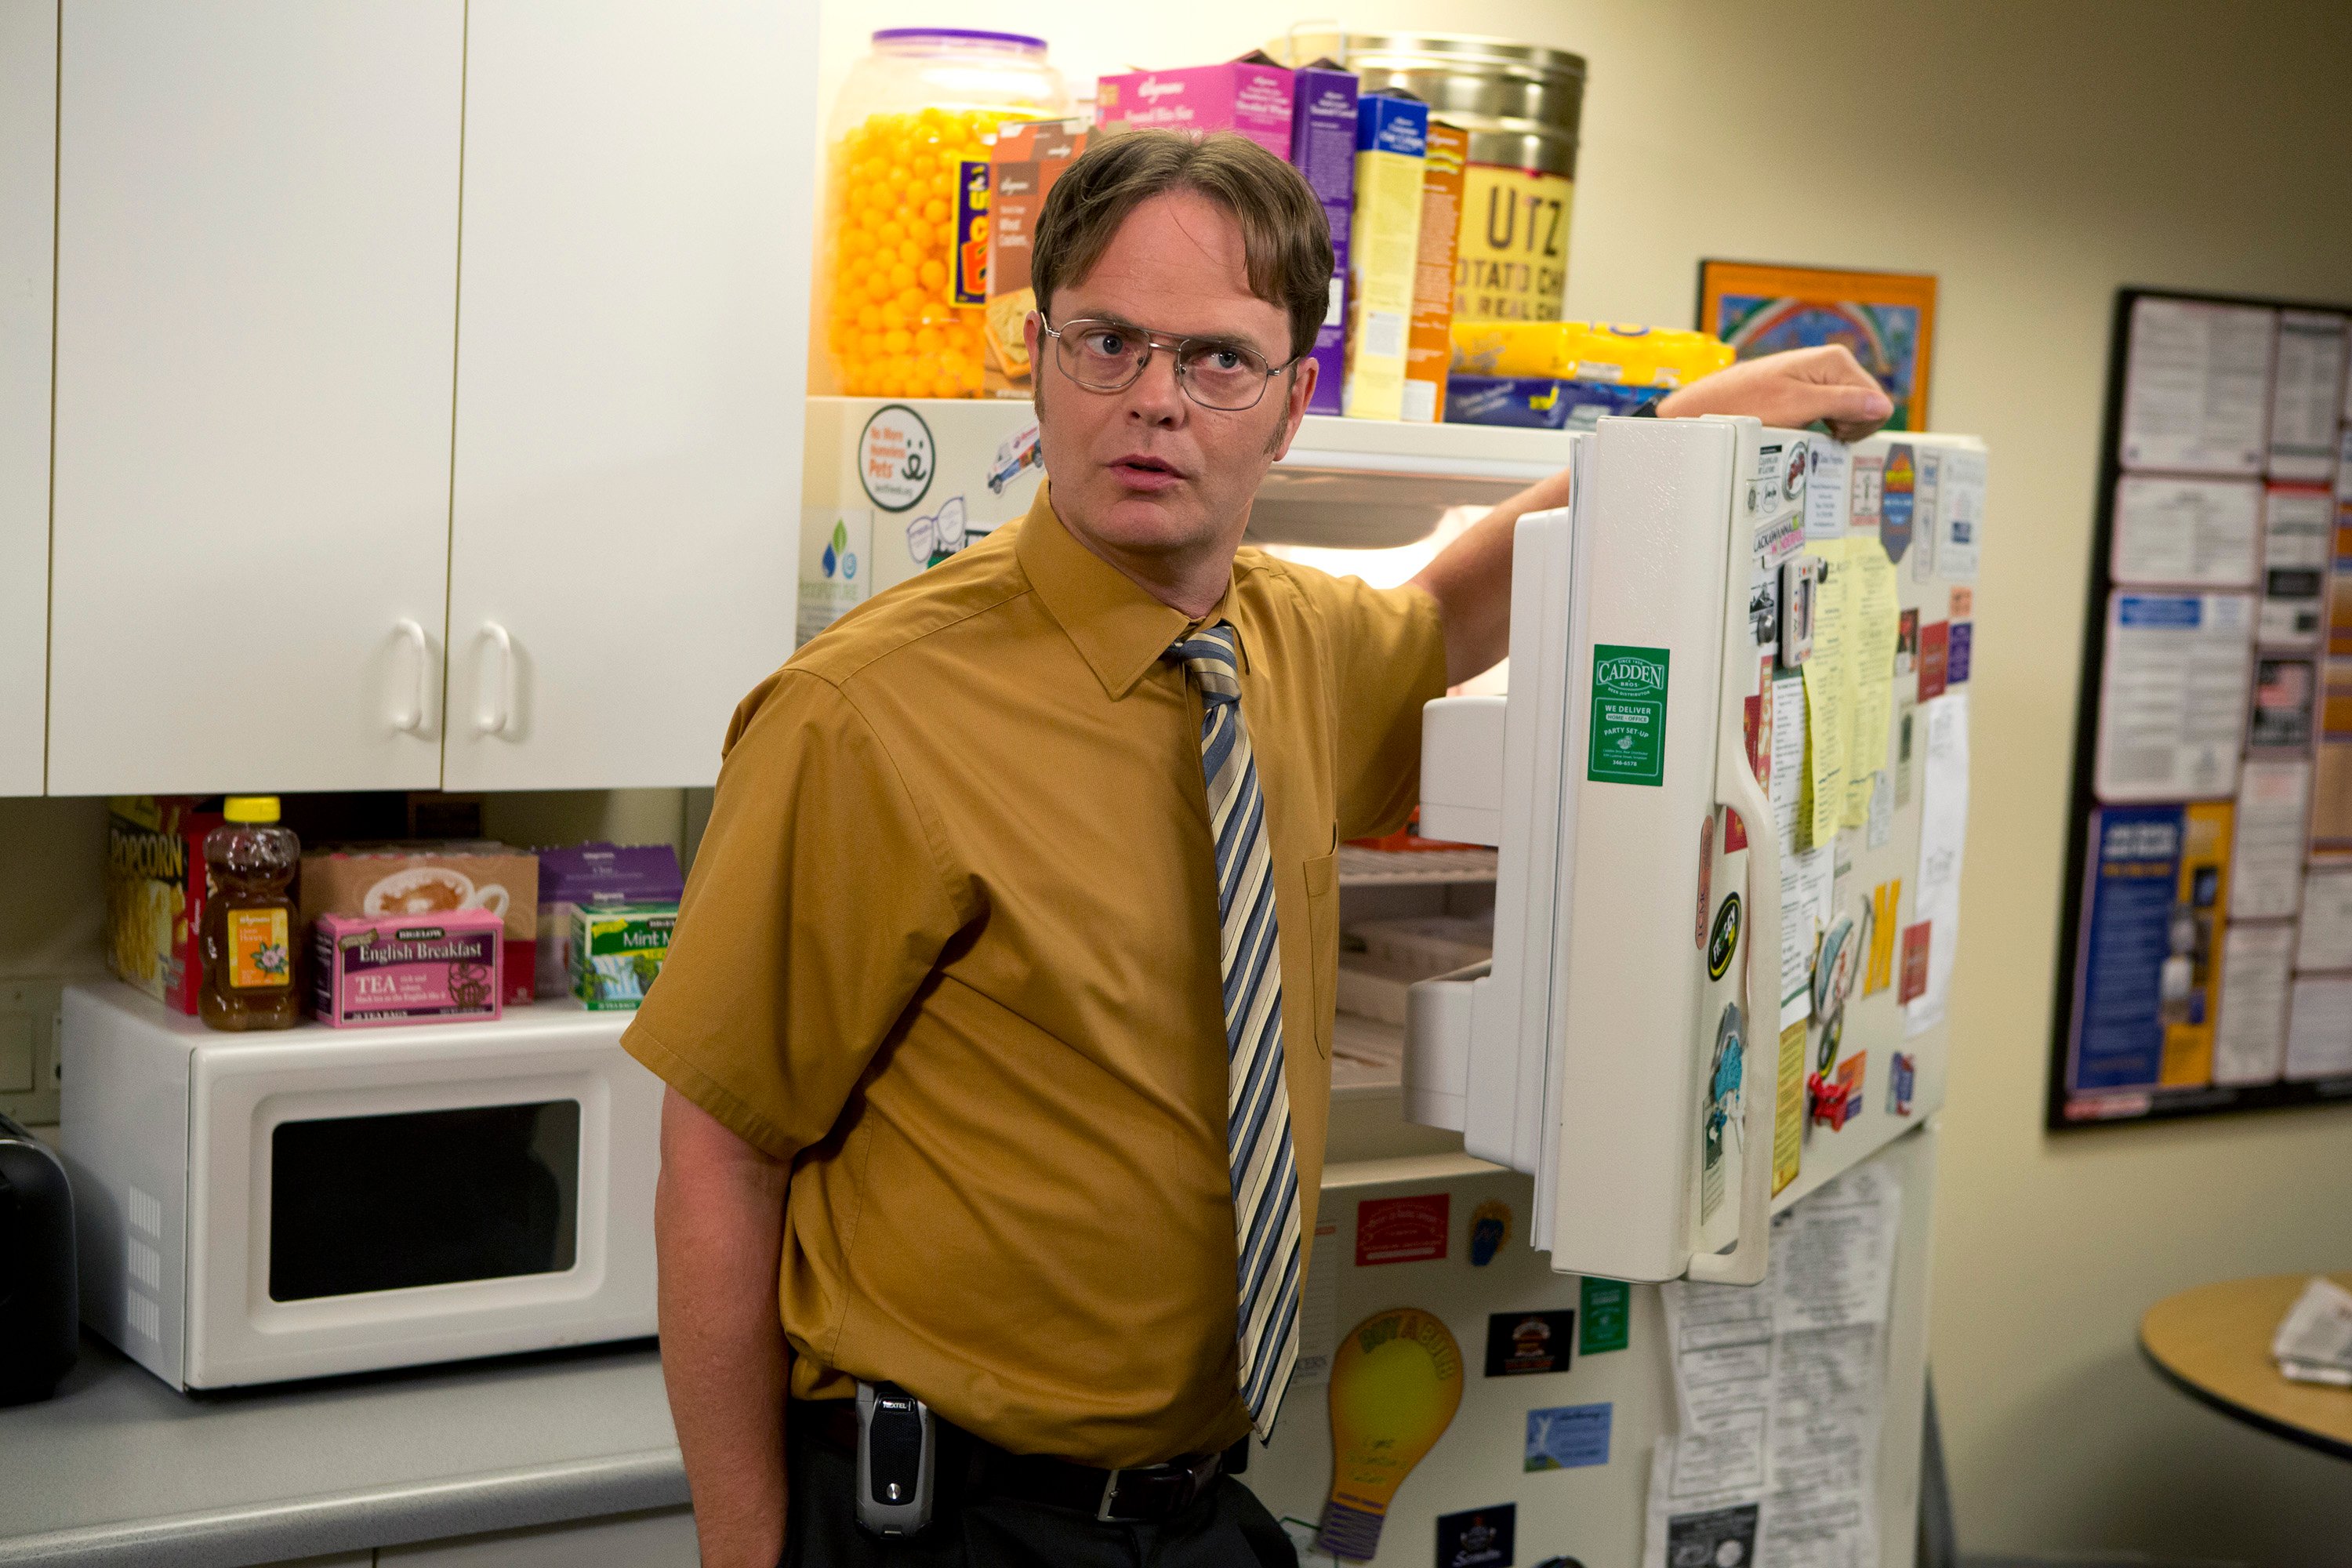 The Office cast member Rainn Wilson on set as Dwight